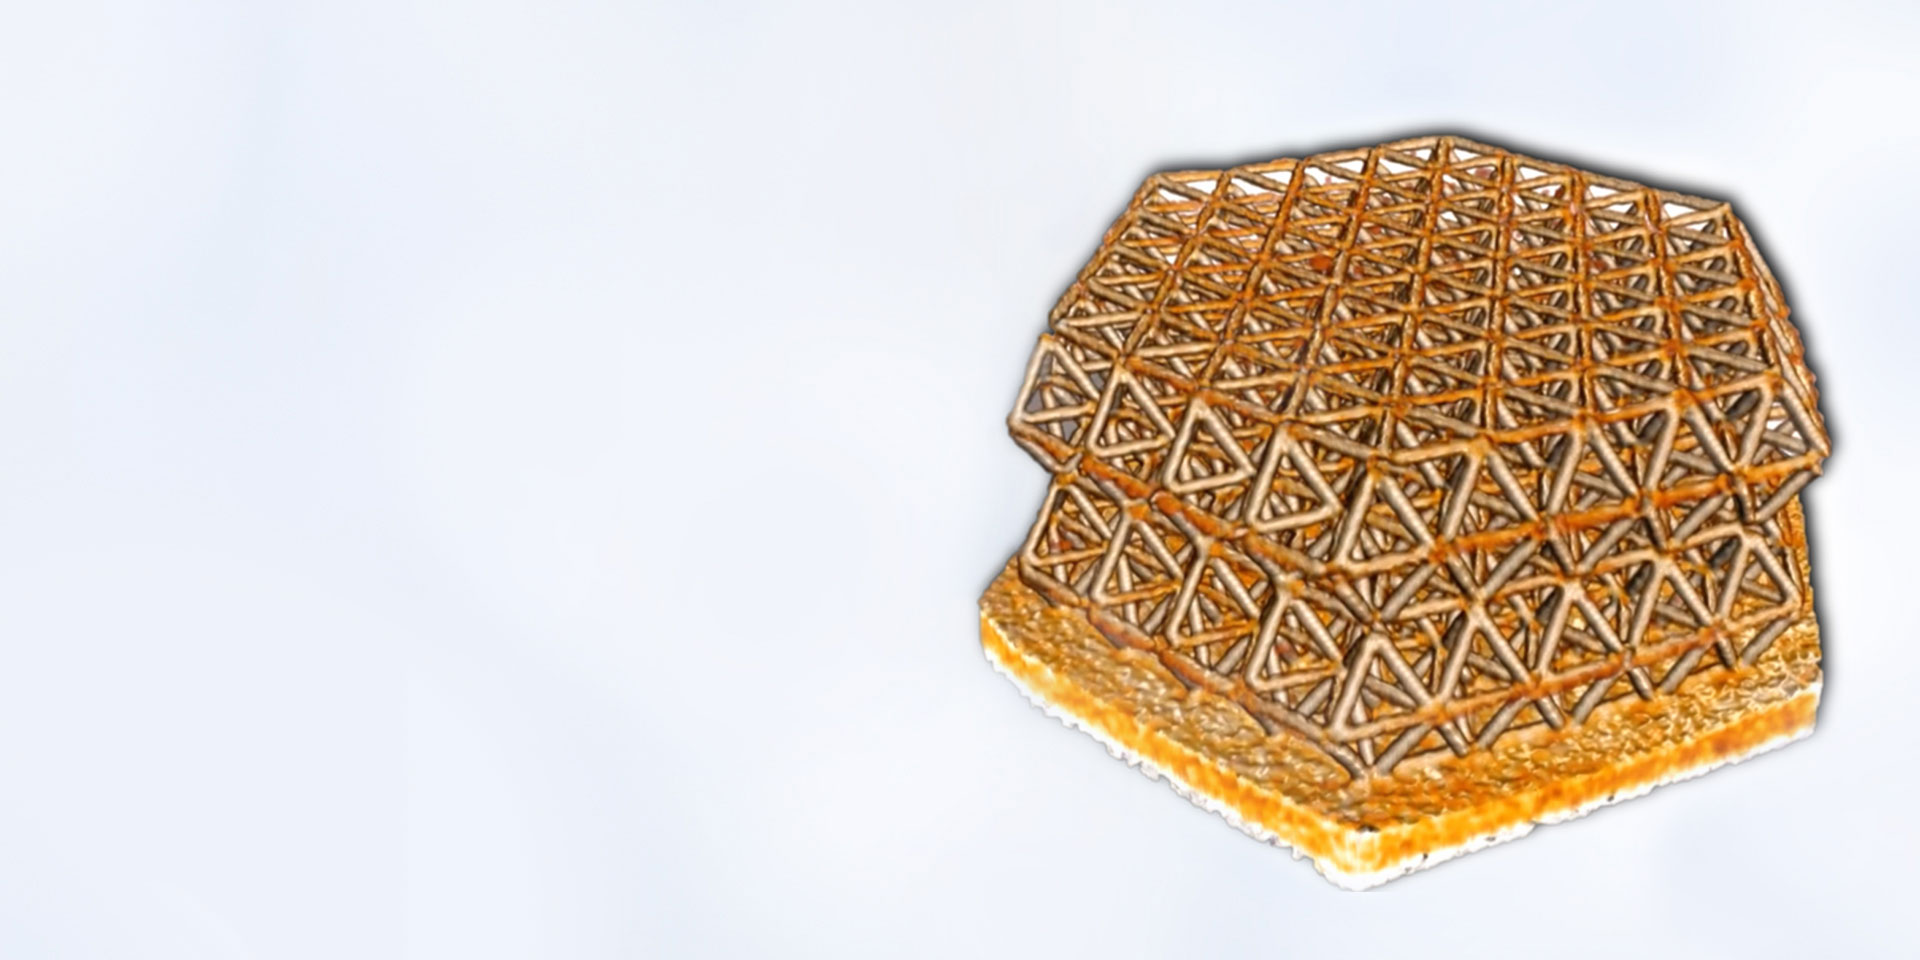 3D printed nanolattice structure, imaged in Zernike phase contrast before in situ compression experiments. Sample courtesy: R. Schweiger, KIT, DE (Sample width 30 µm).